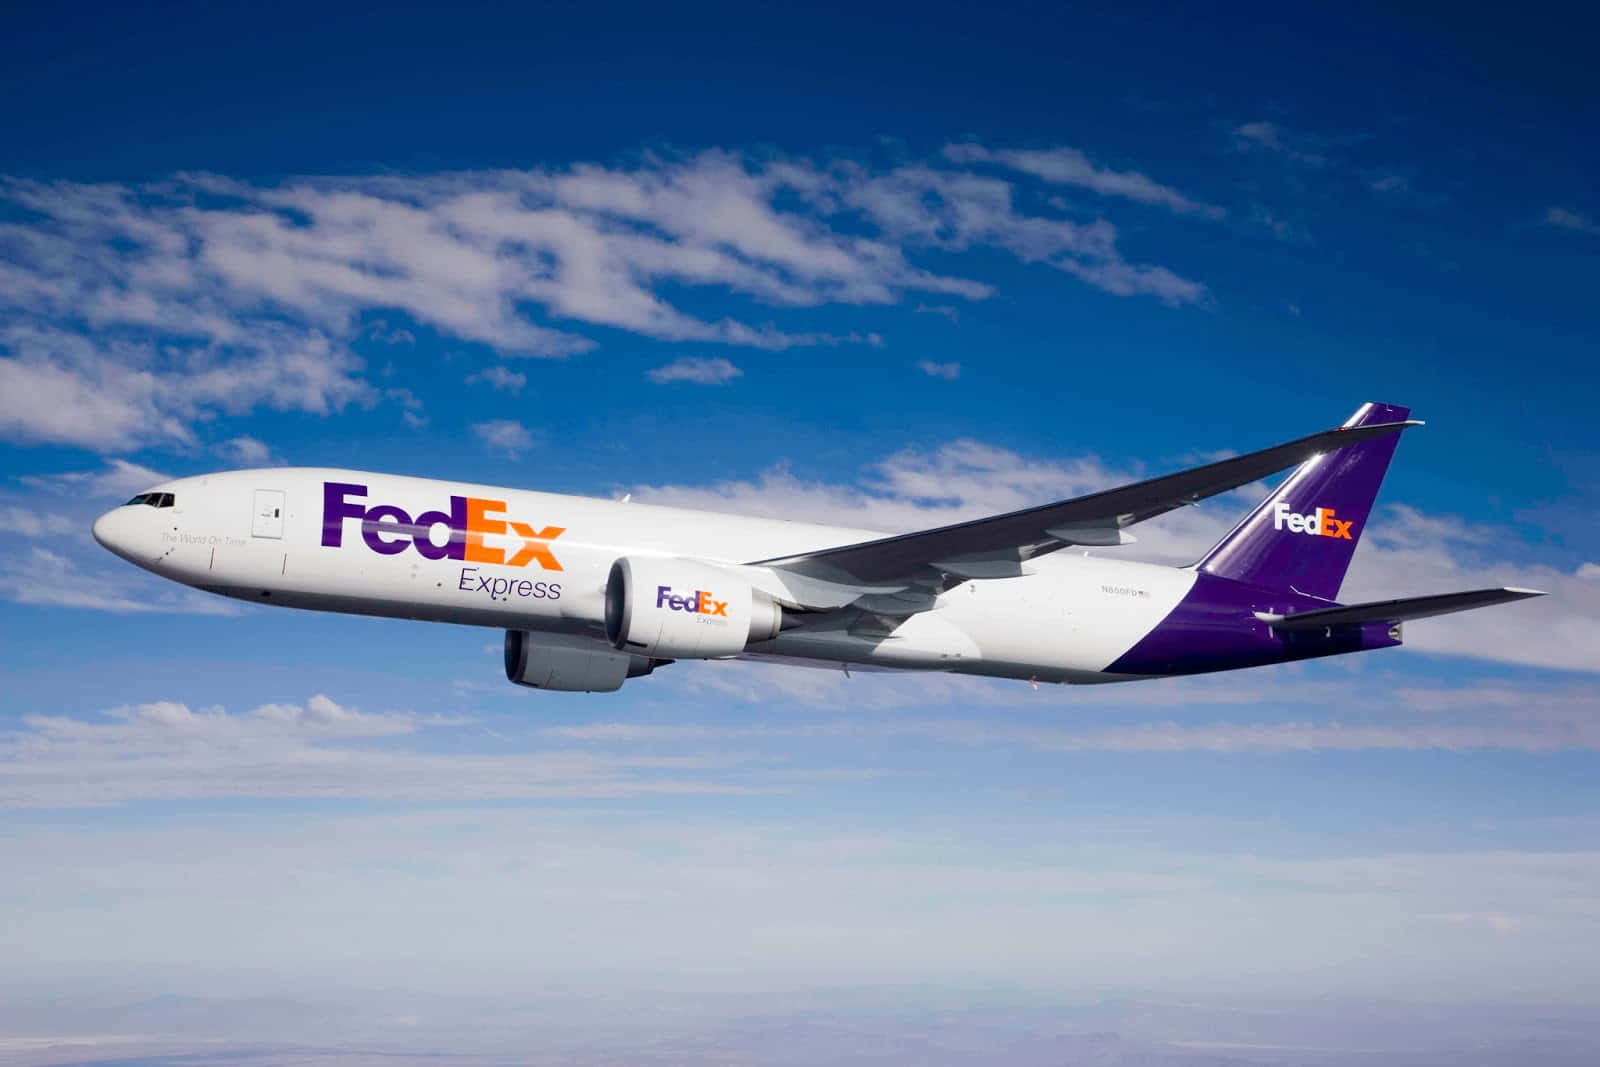 Fedexboeing 787 - Volo - Volo - Volo - Volo